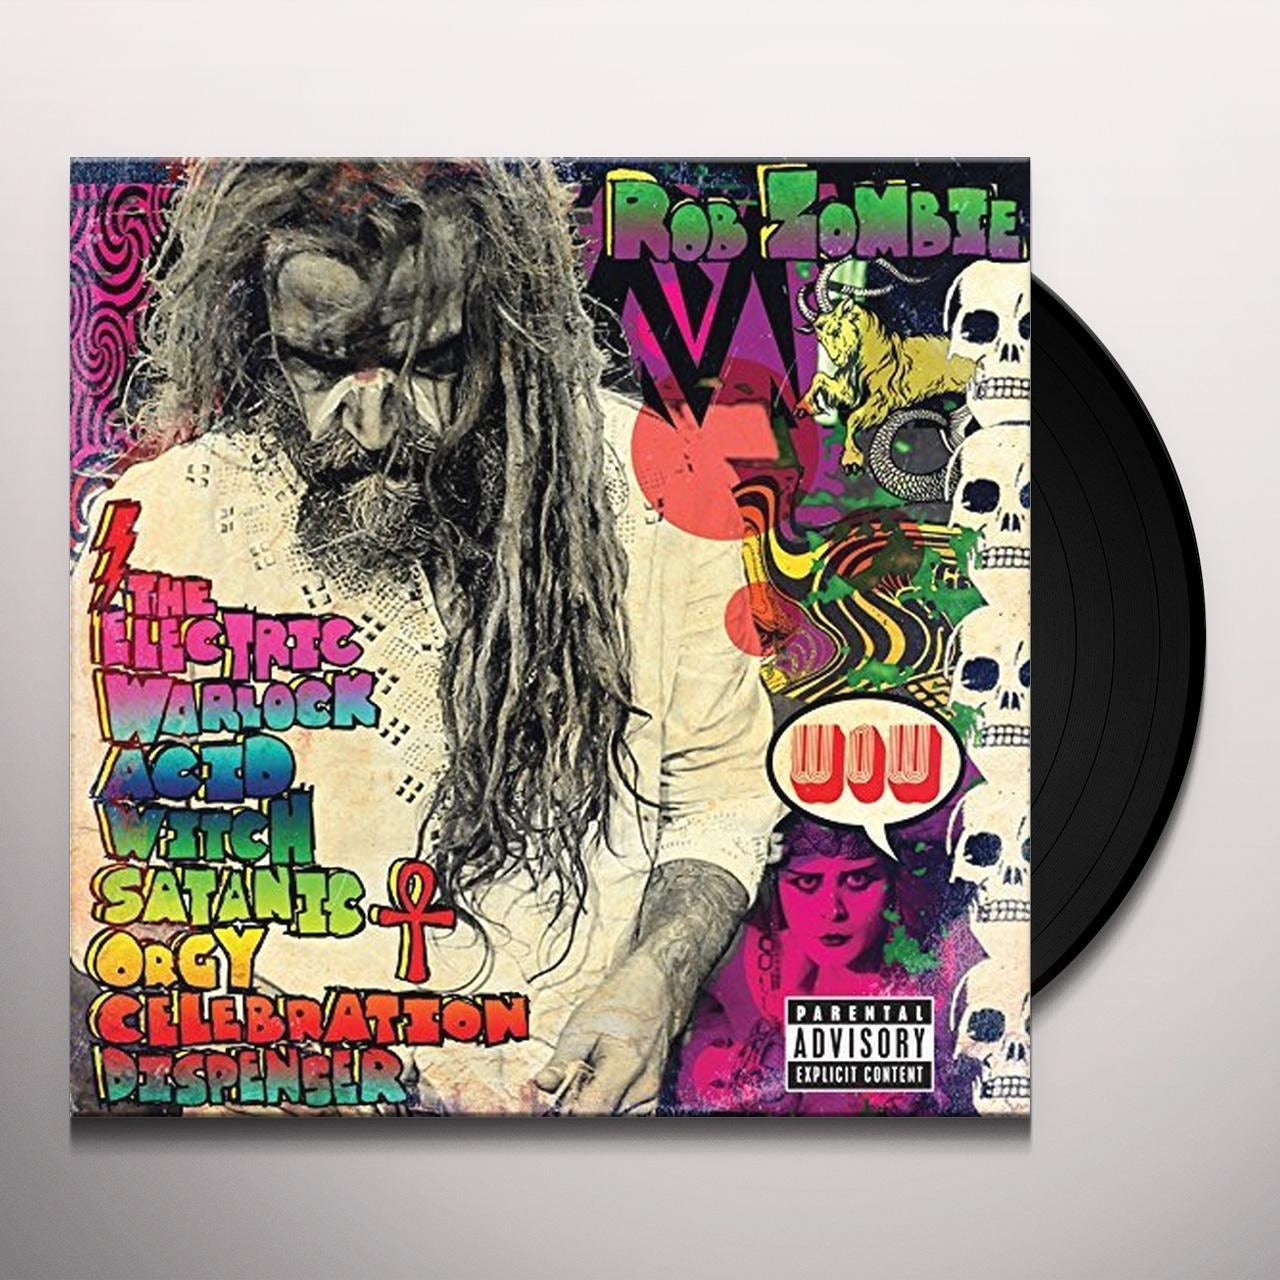 NEW (Euro) - Rob Zombie, The Electric Warlock Acid Witch Satanic Orgy Celebration  Dispenser LP